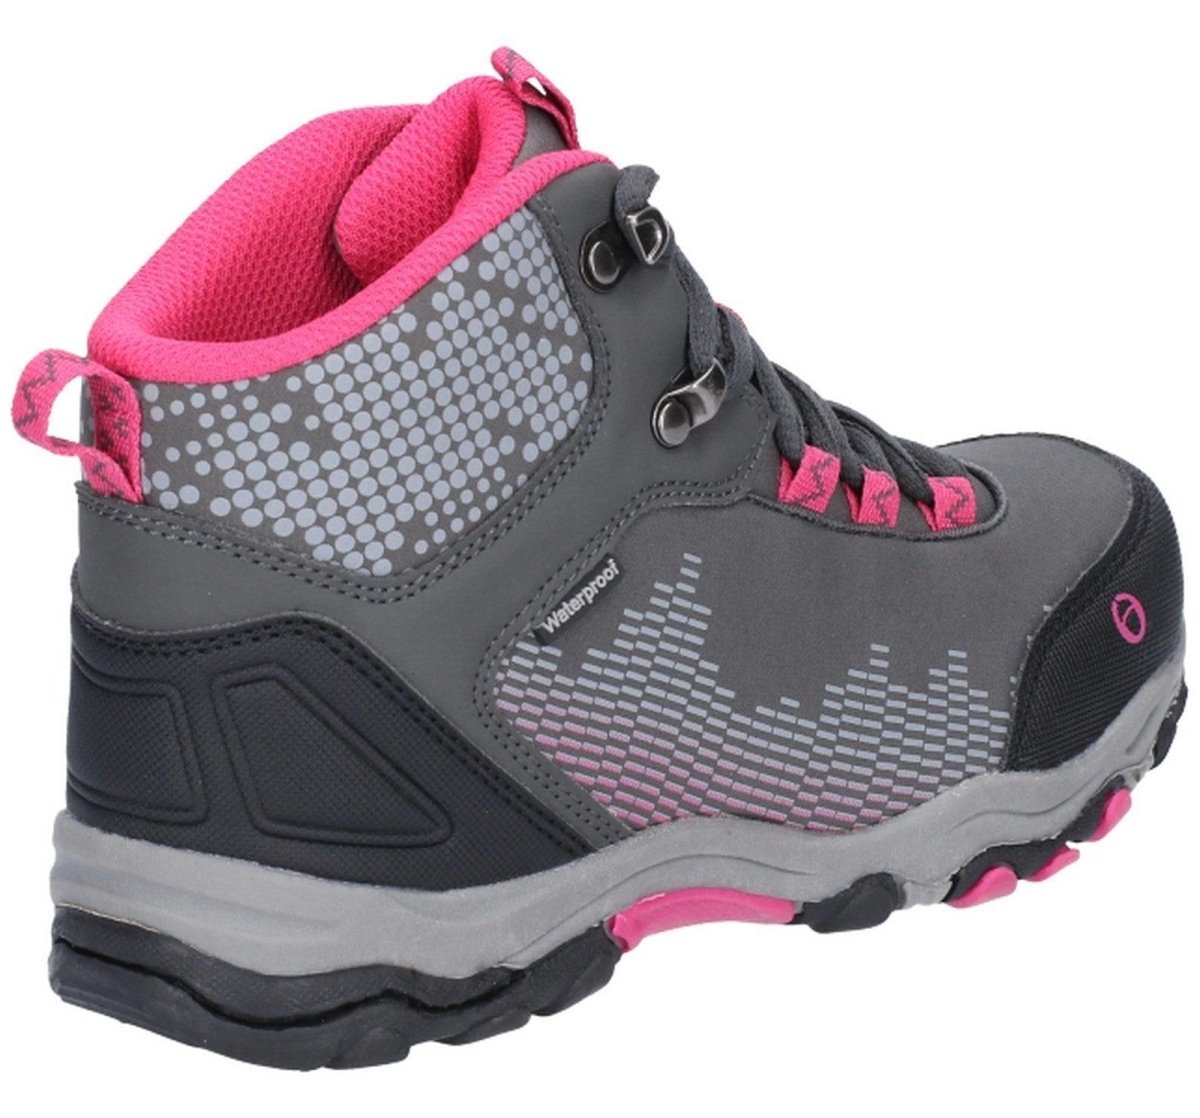 Cotswold Ducklington Kids Hiking Boots - Shoe Store Direct